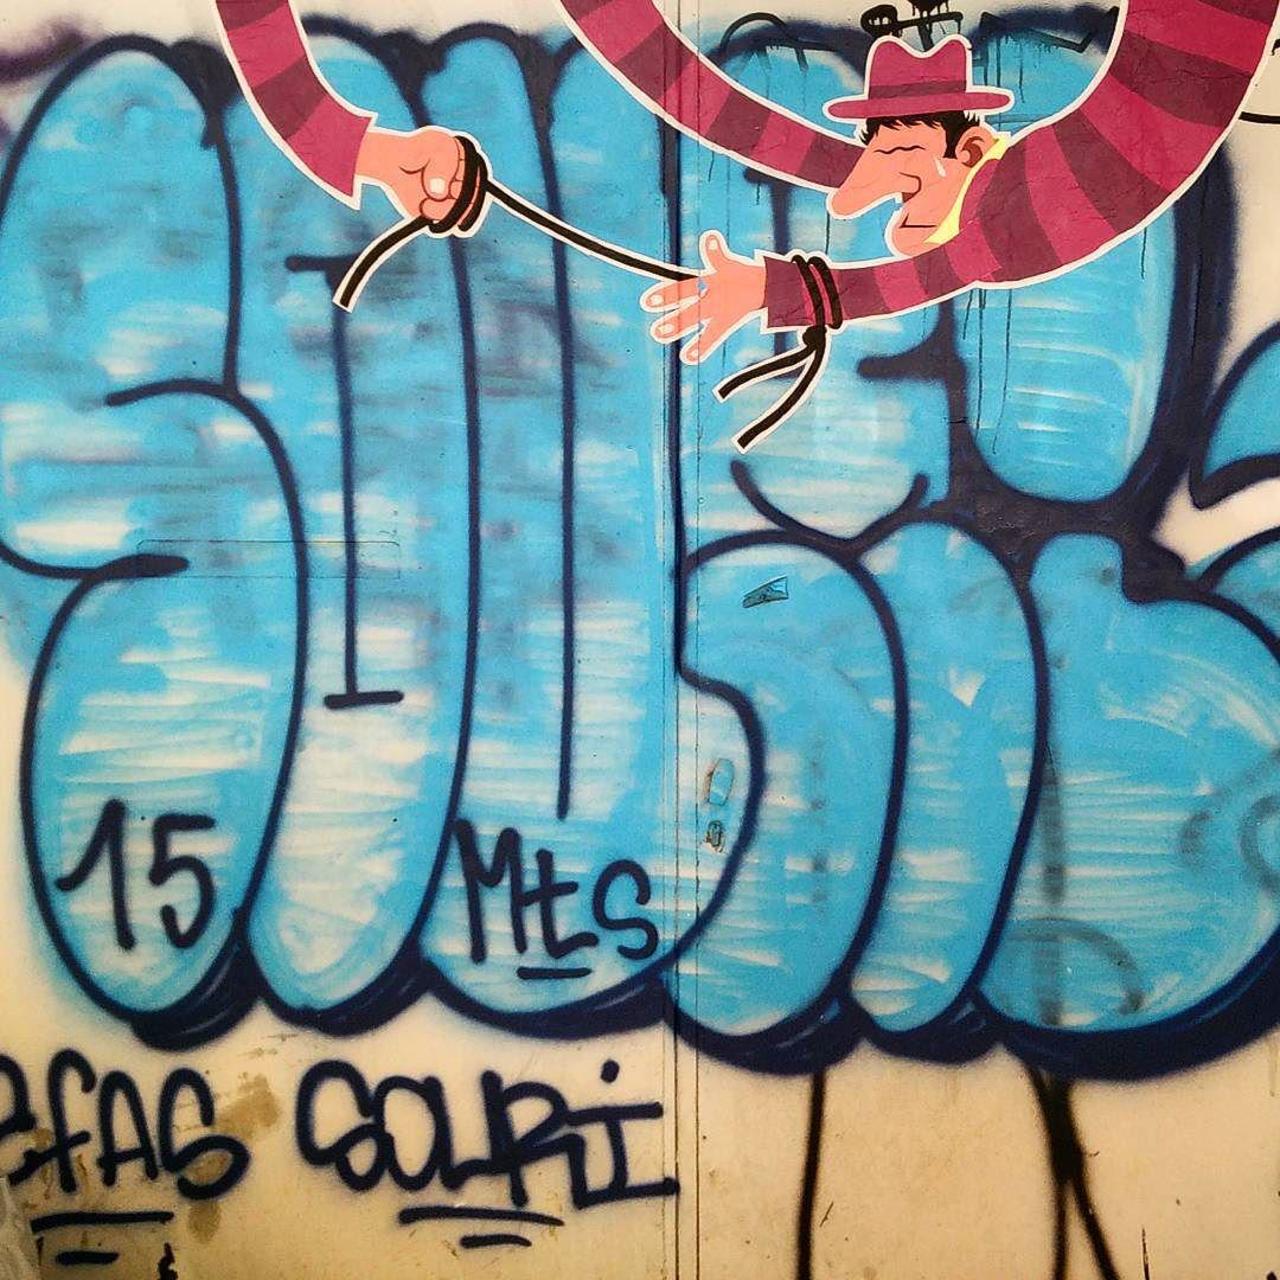 #Paris #graffiti photo by @ceky_art http://ift.tt/1X7vWz0 #StreetArt http://t.co/ikcxBOX9eI